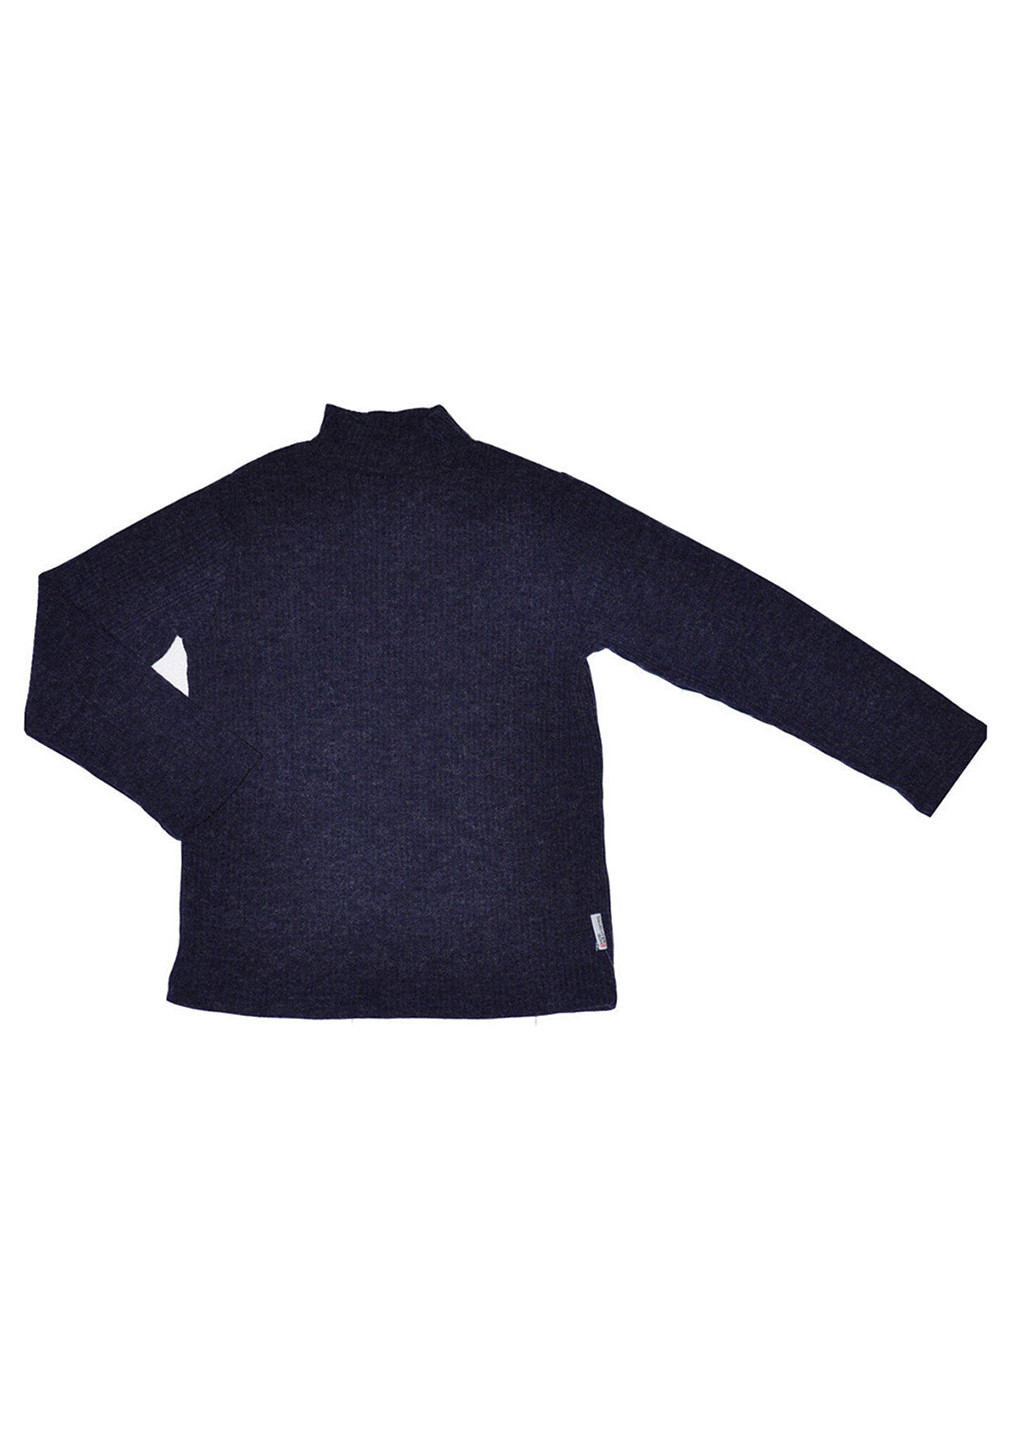 Темно-синий демисезонный свитер джемпер D&S